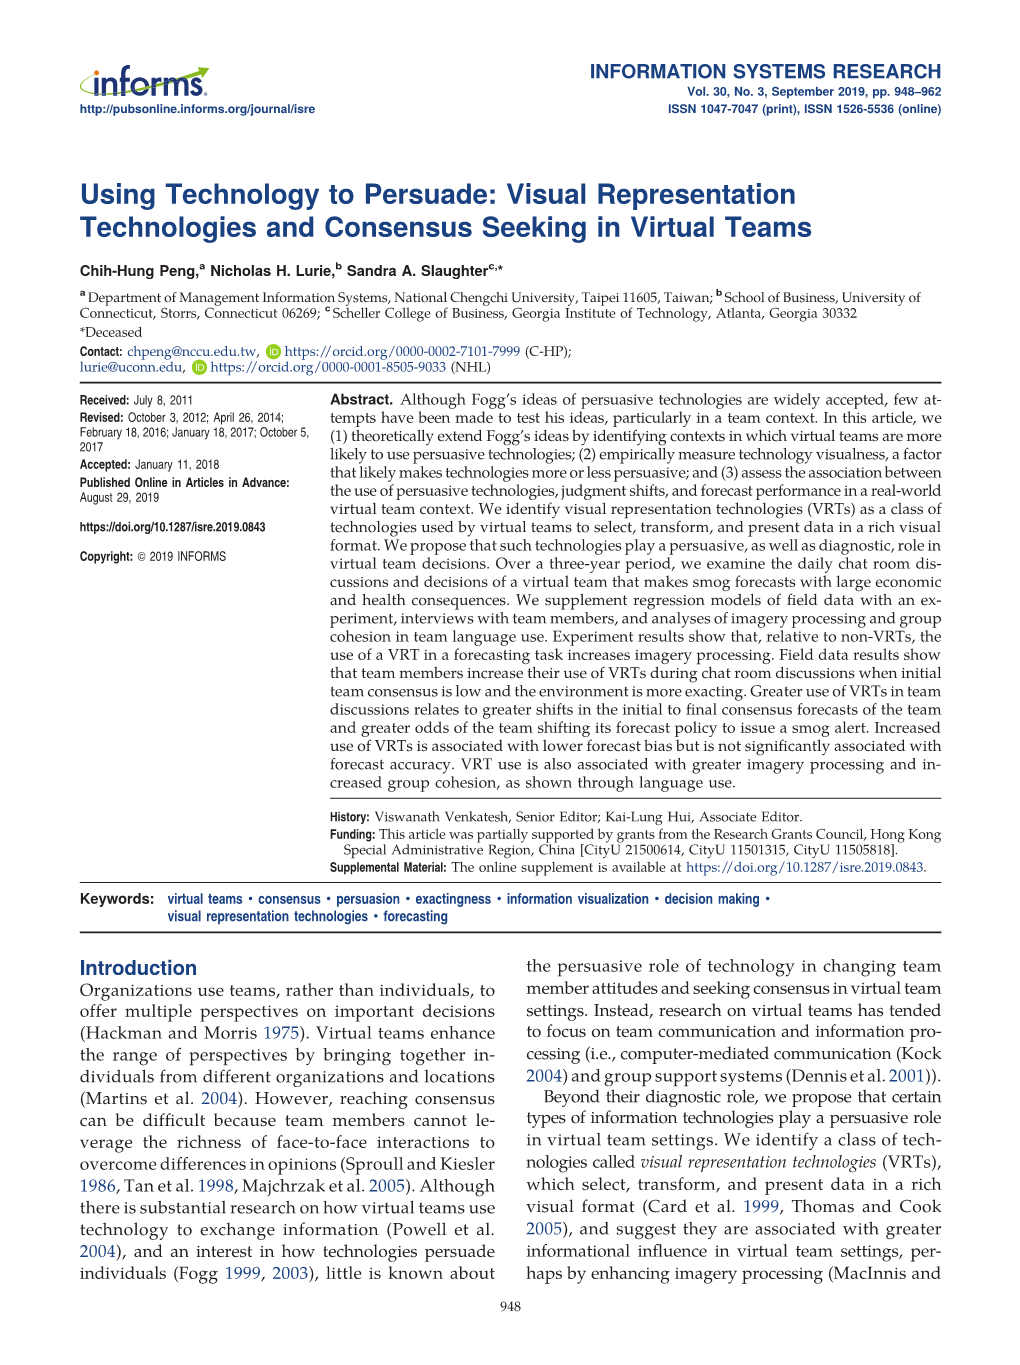 Visual Representation Technologies and Consensus Seeking in Virtual Teams